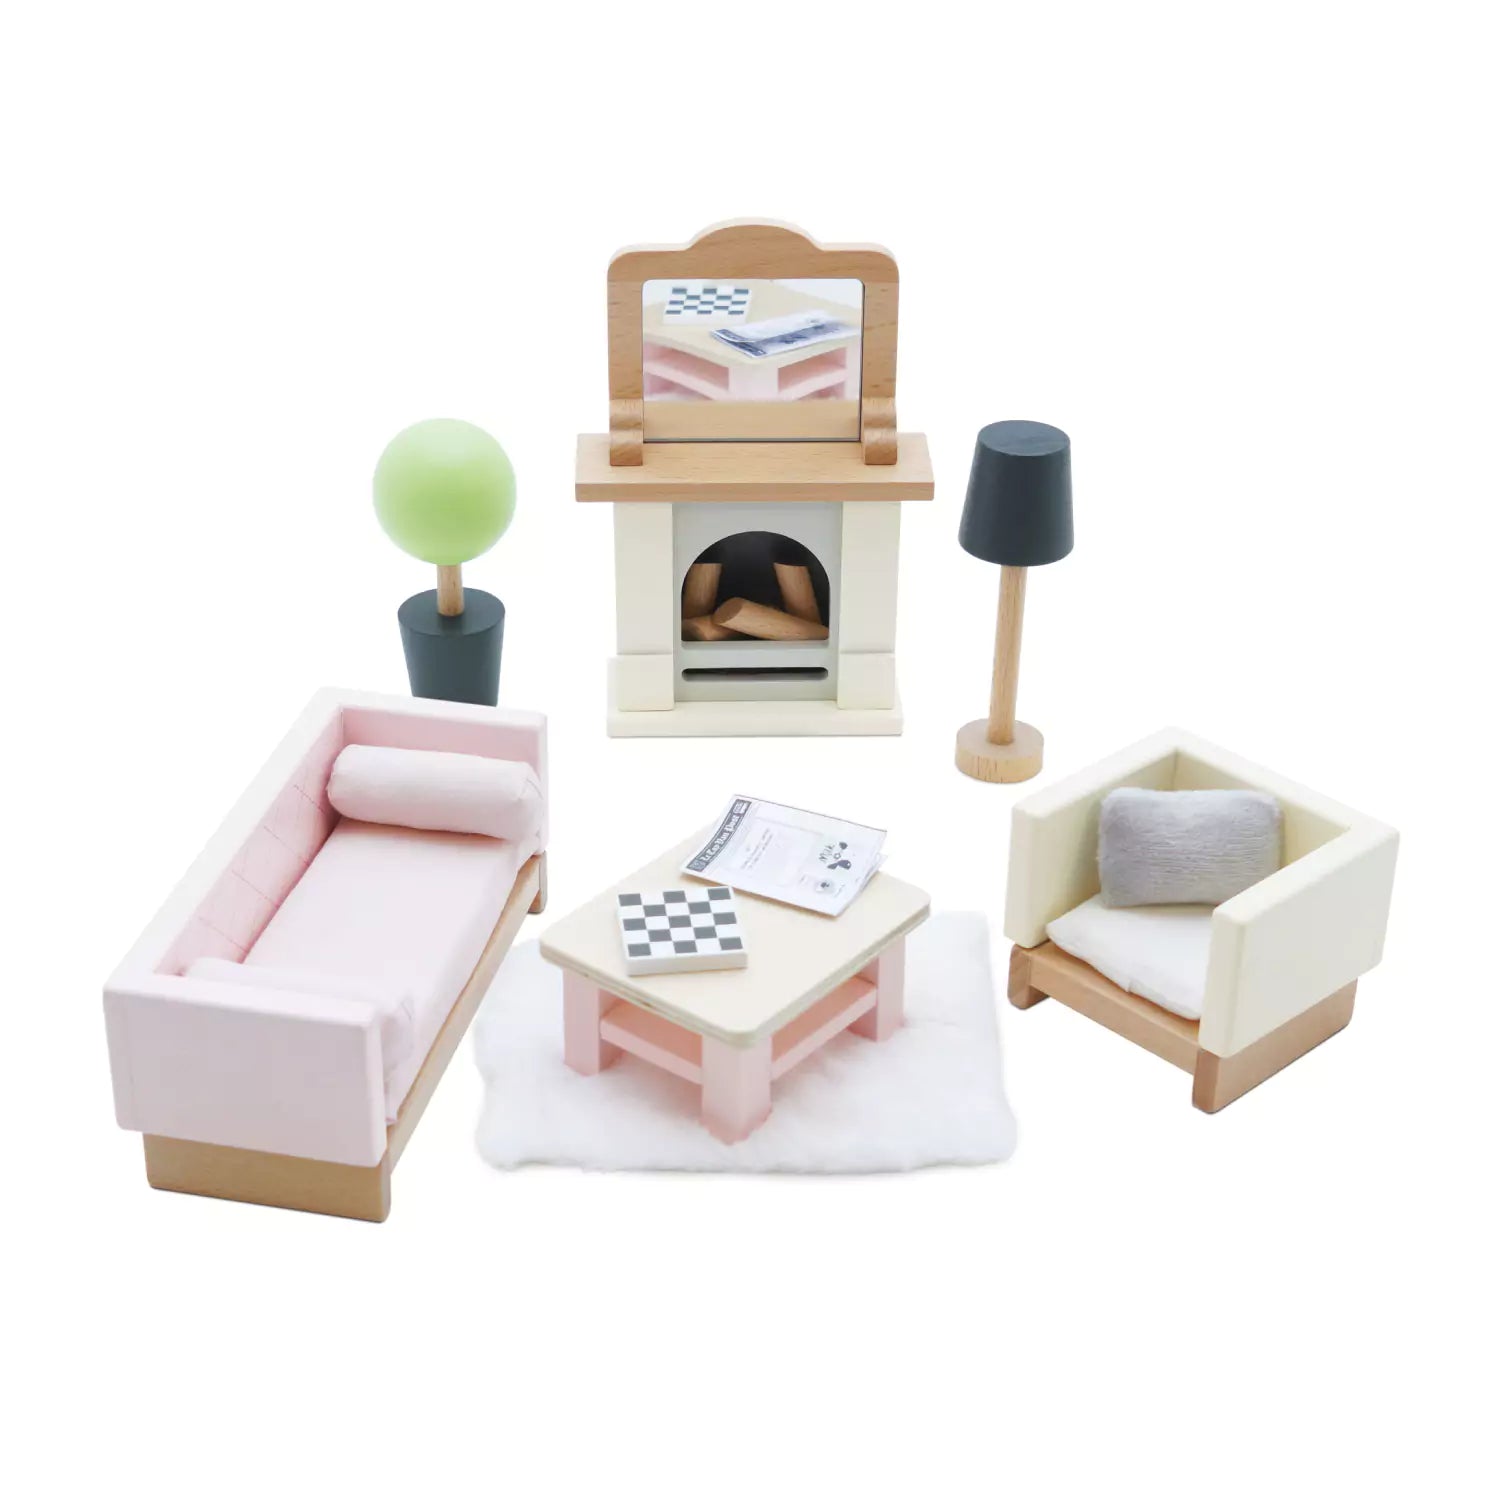 An image of Wooden Dolls Living Room Furniture set